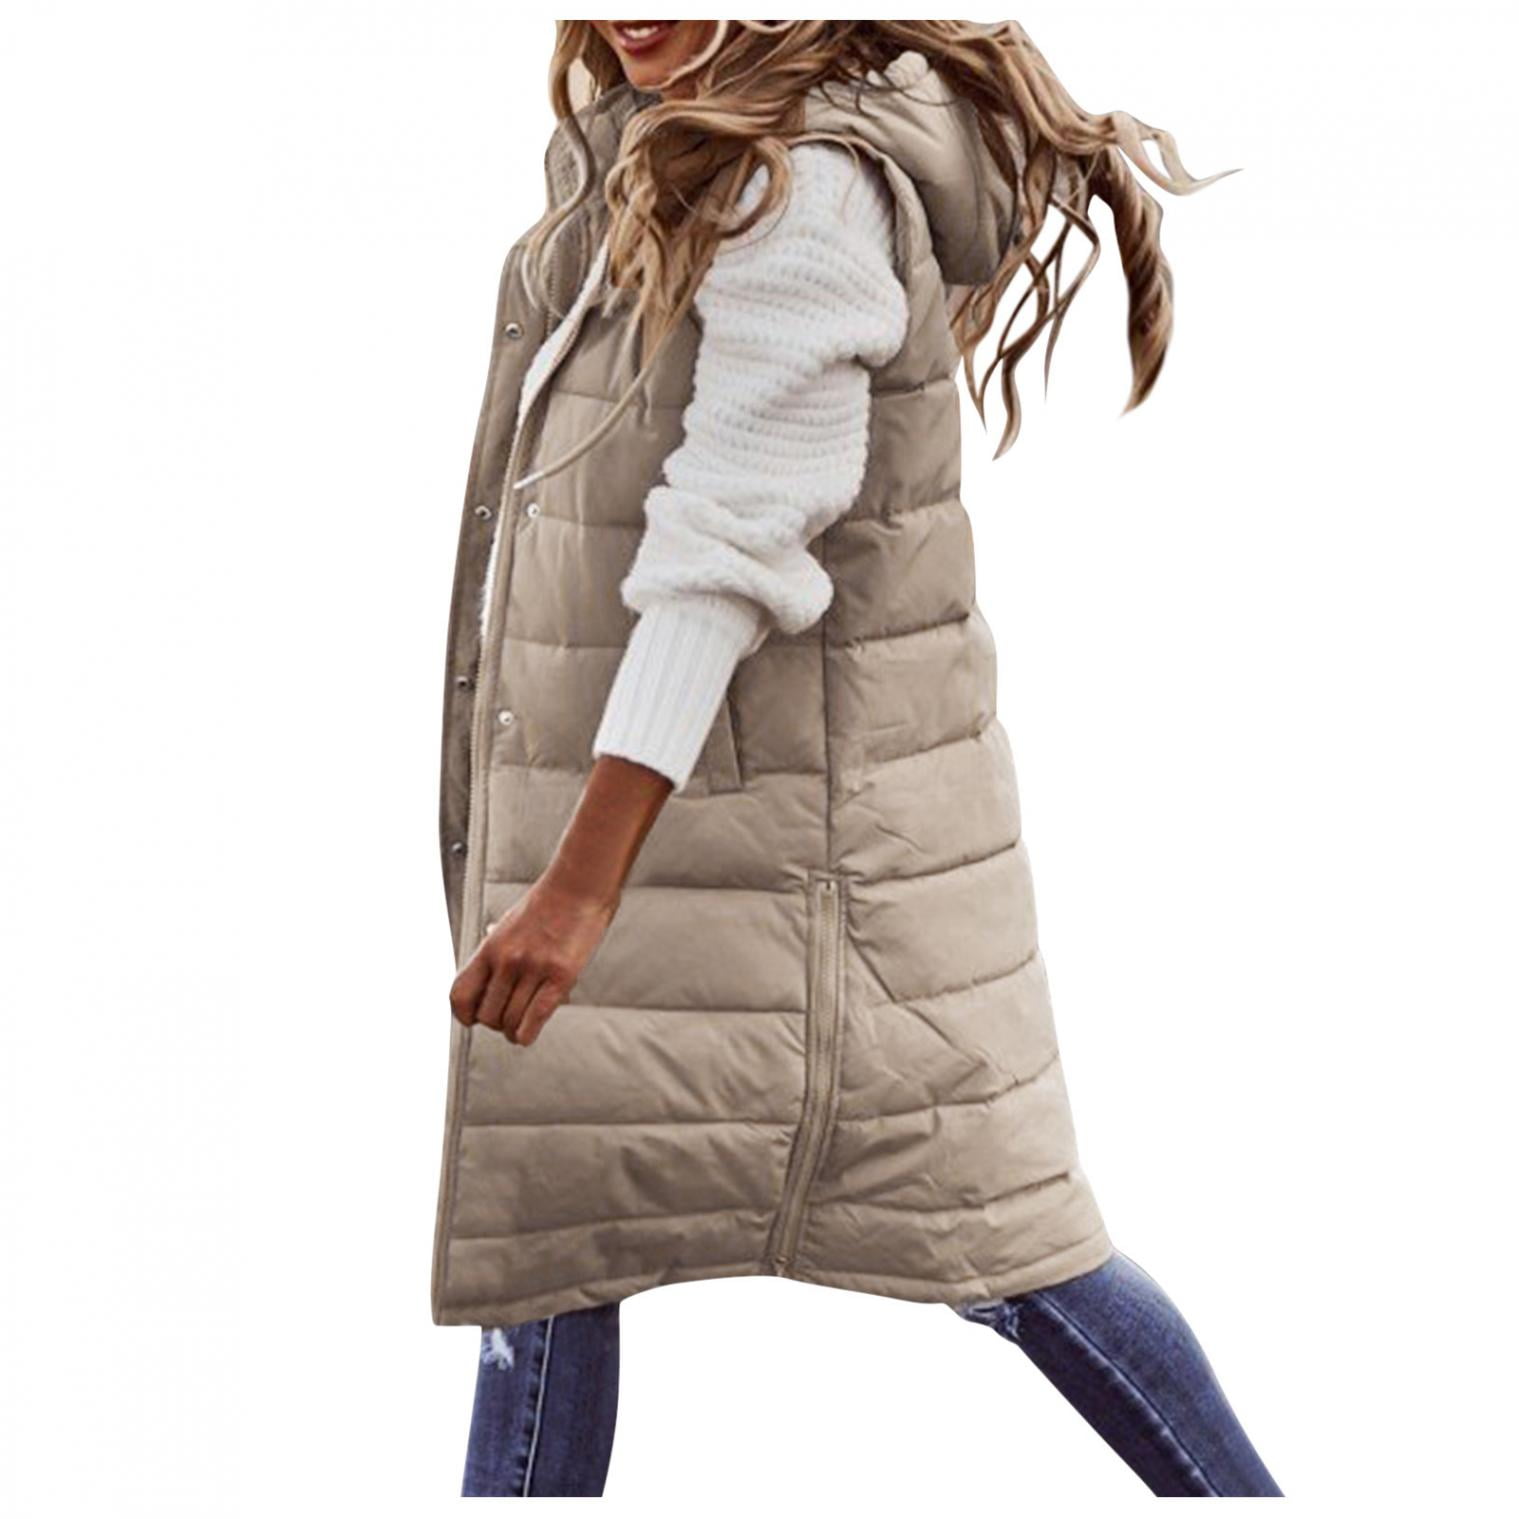 ZSHOW Girls' Warm Hooded Puffer Vest Thicken Padded Winter Coat